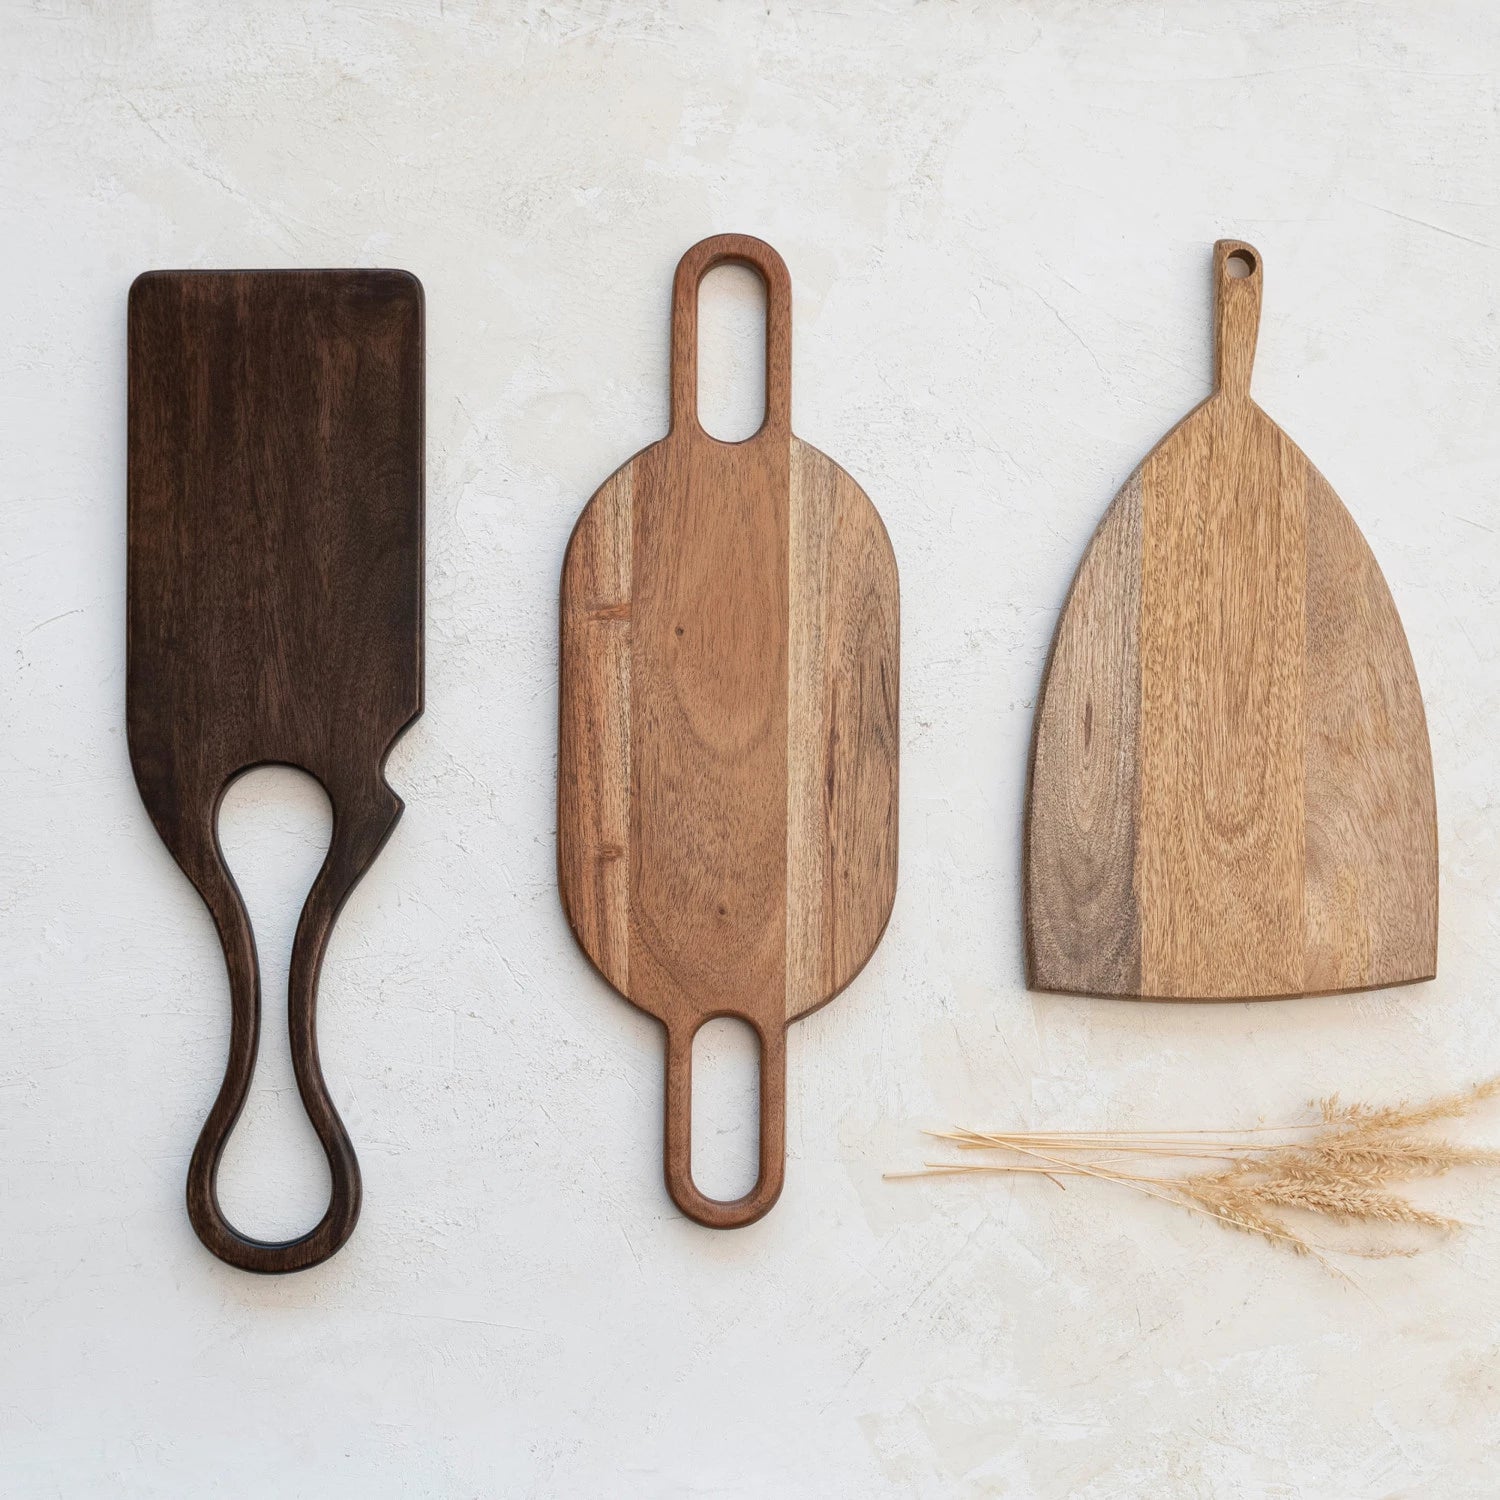 Acacia Wood Cheese/Cutting Board w/ Handles